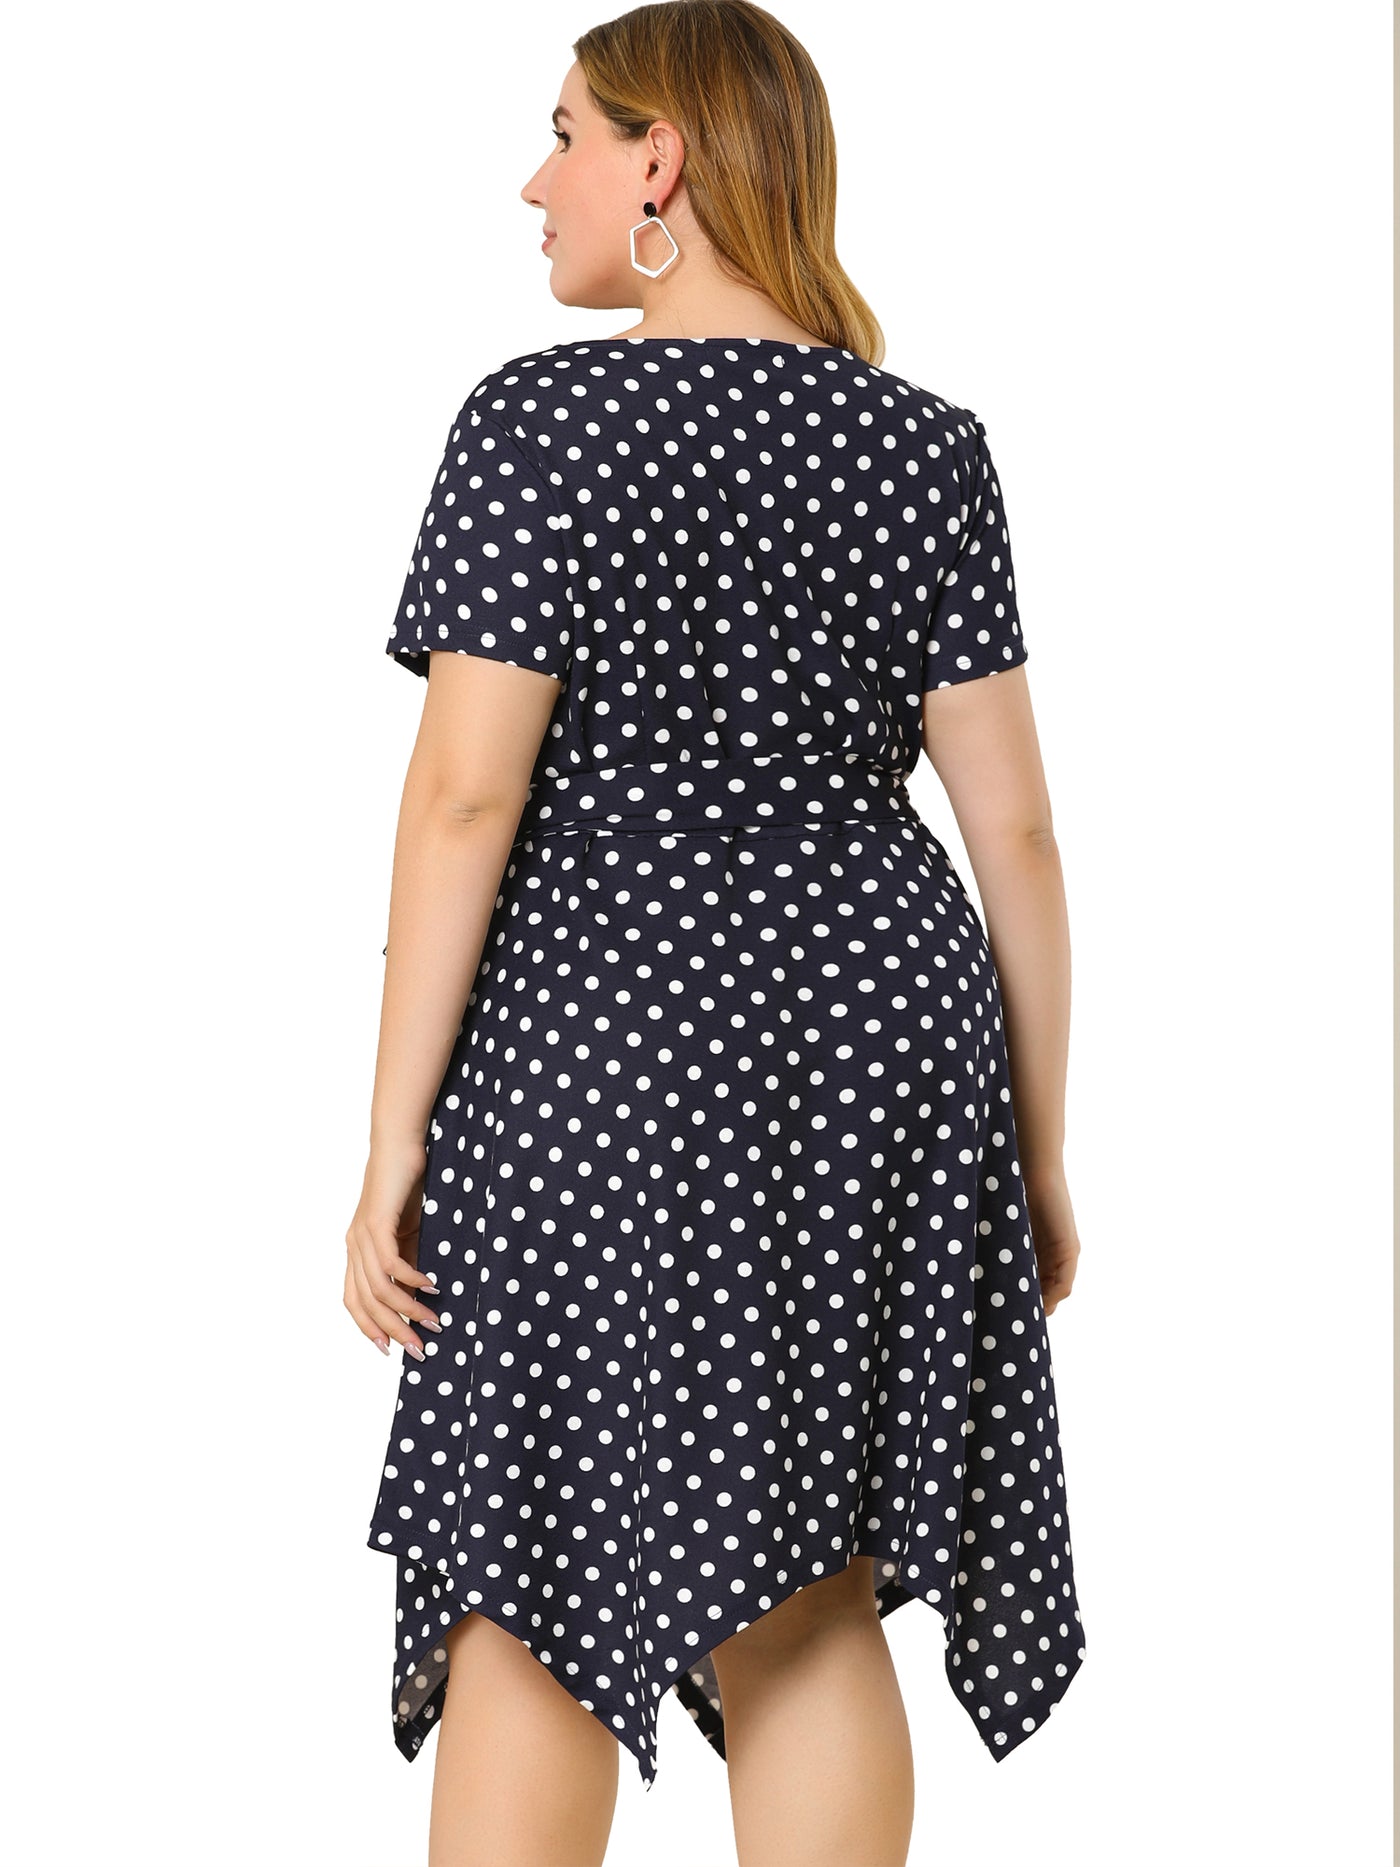 Bublédon Polka Dot Round Neck Short Sleeve Plus Size Dress